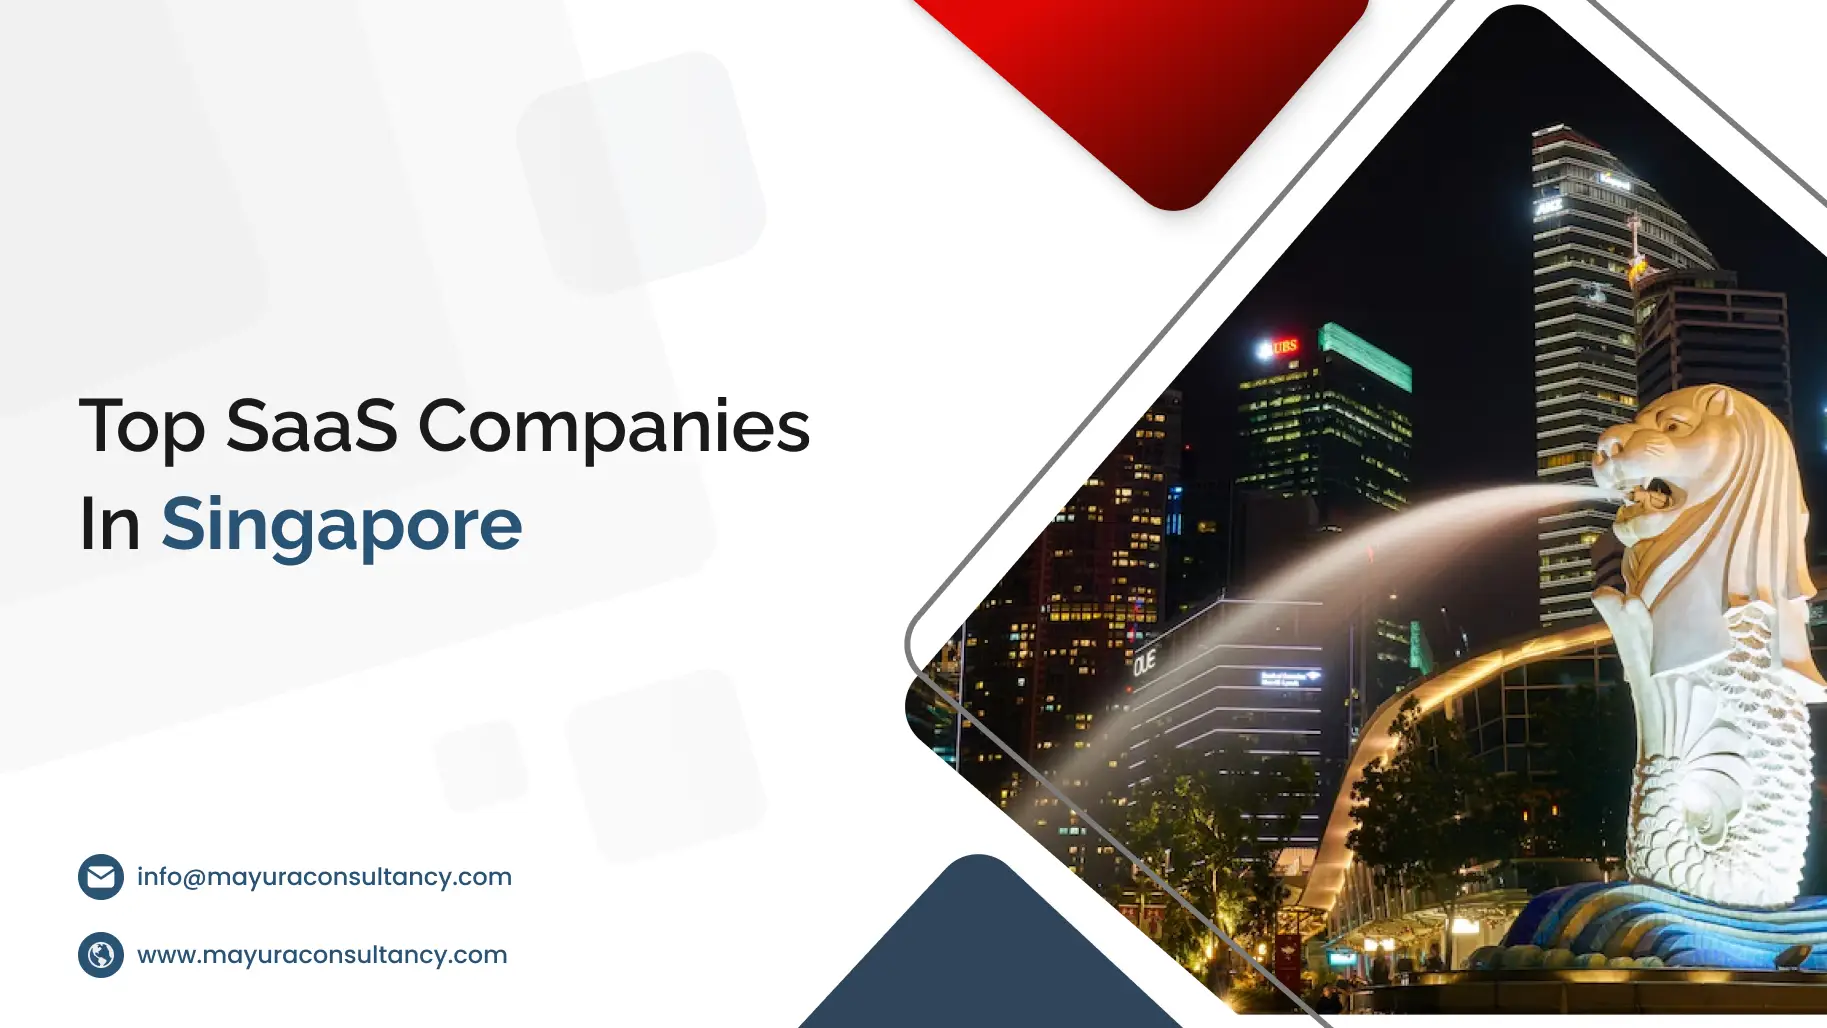 Top SaaS Companies in Singapore